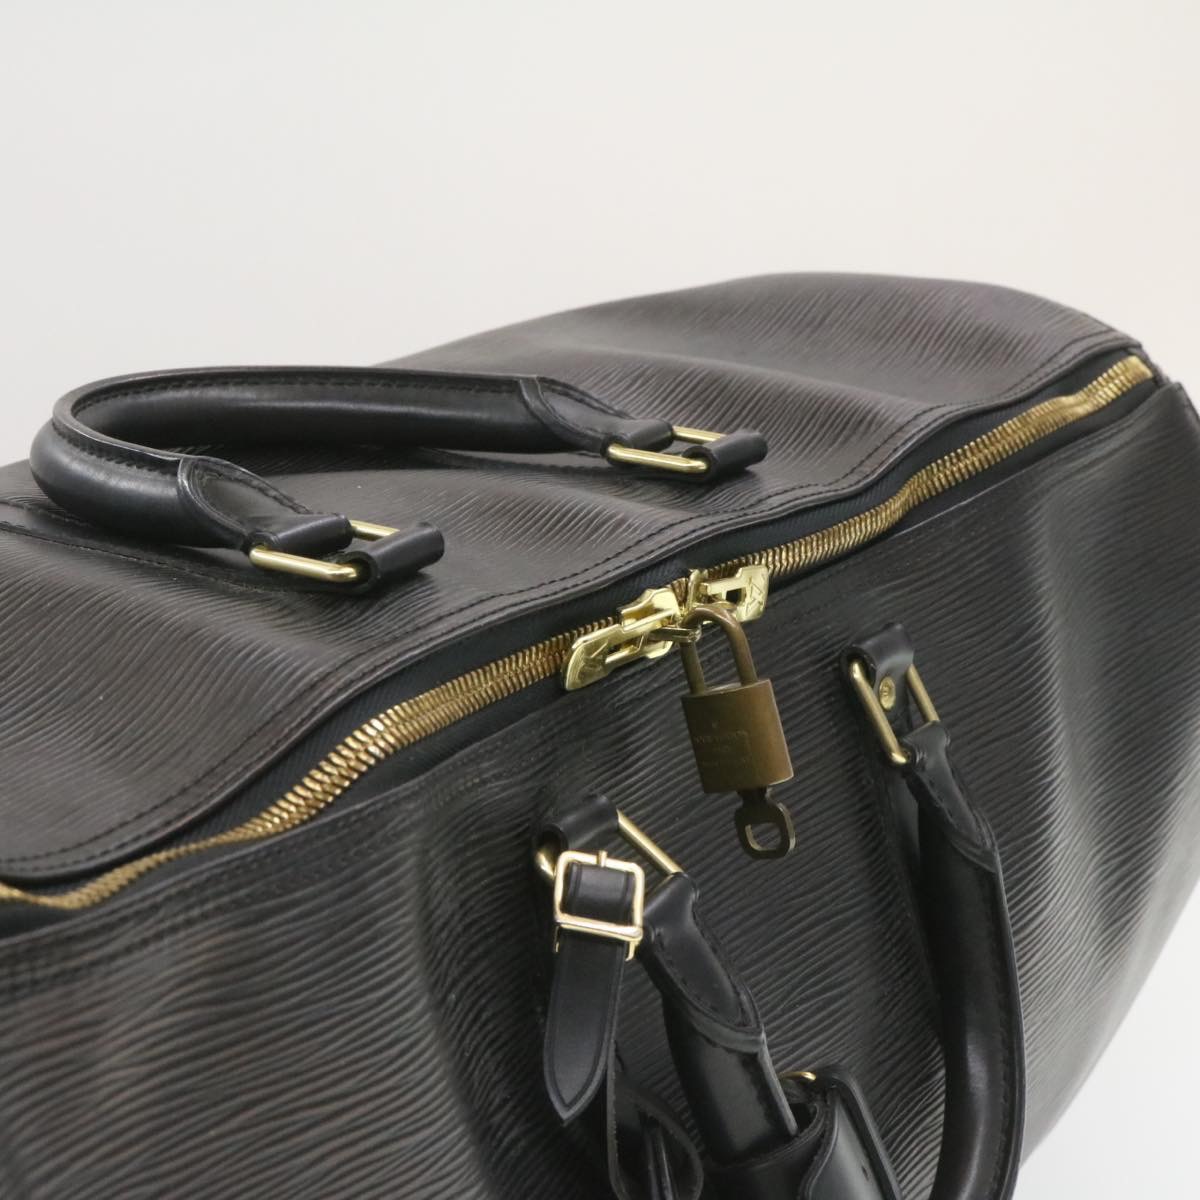 Louis Vuitton Black Epi Leather Noir Keepall 50 Boston Duffle Bag